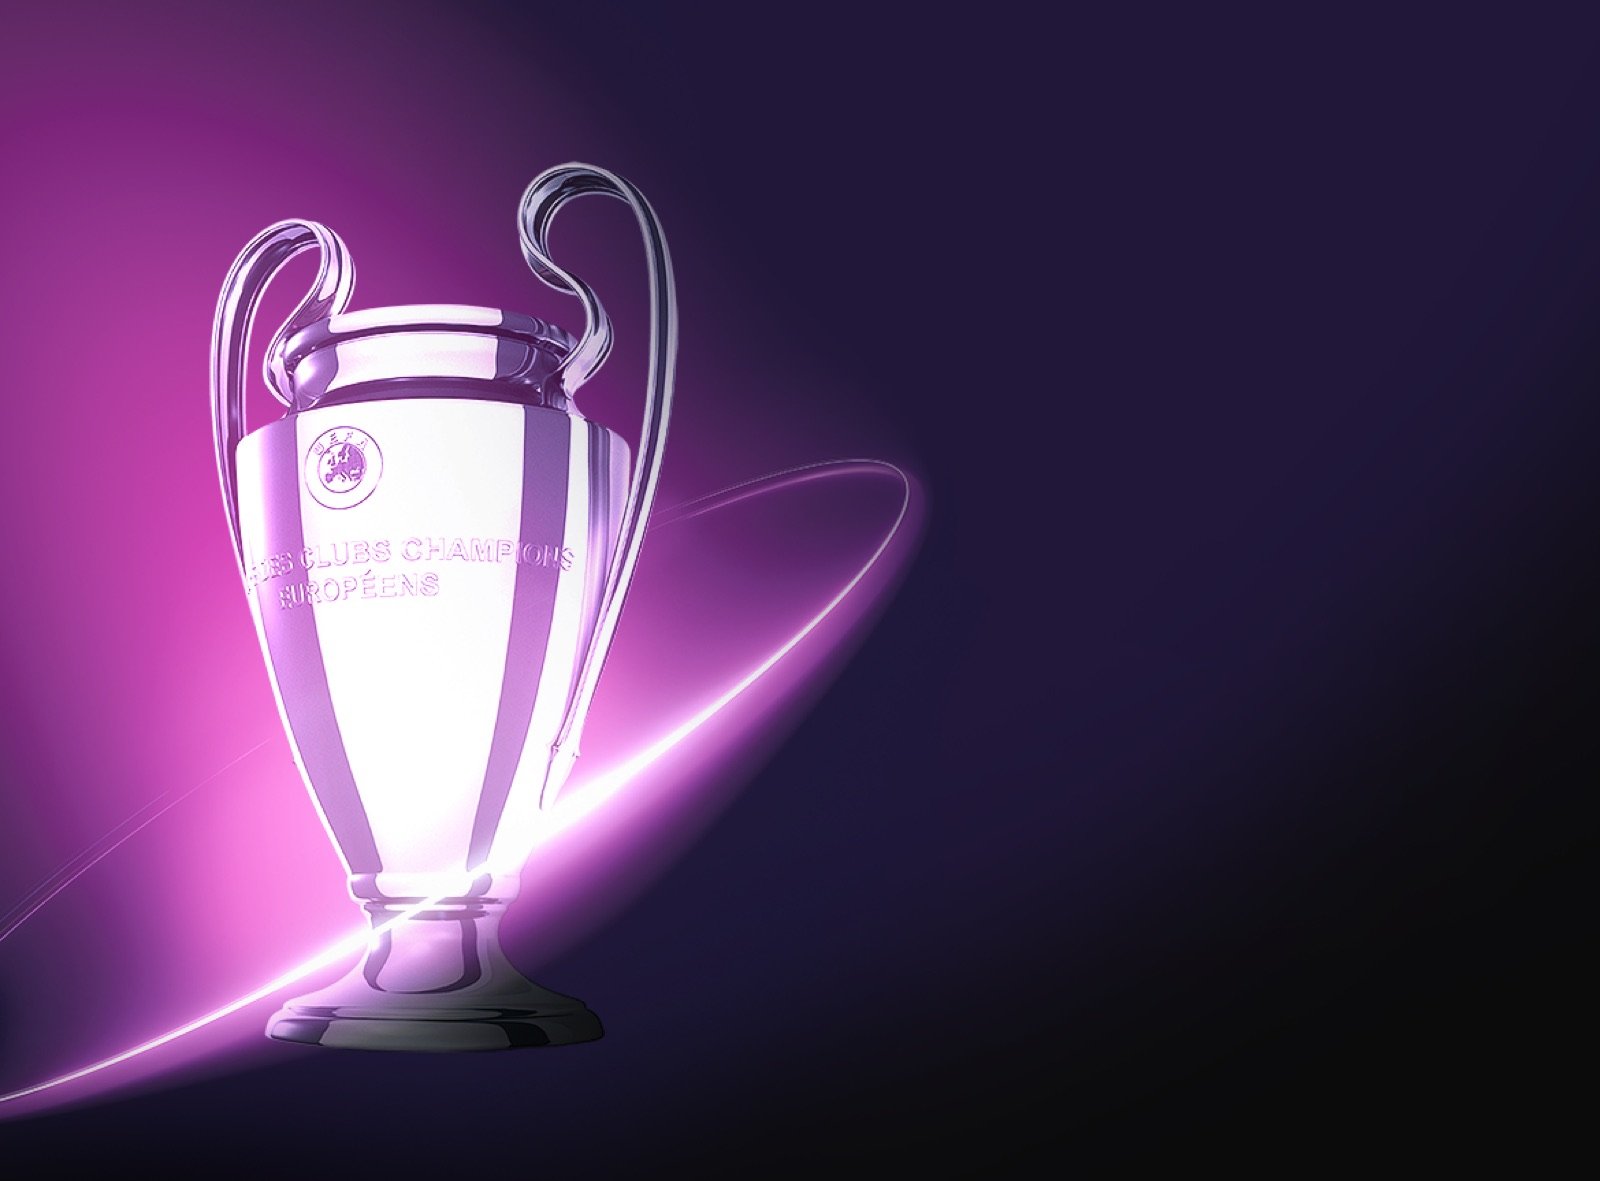 UEFA Champions League 2022 Final: Liverpool v Real Madrid